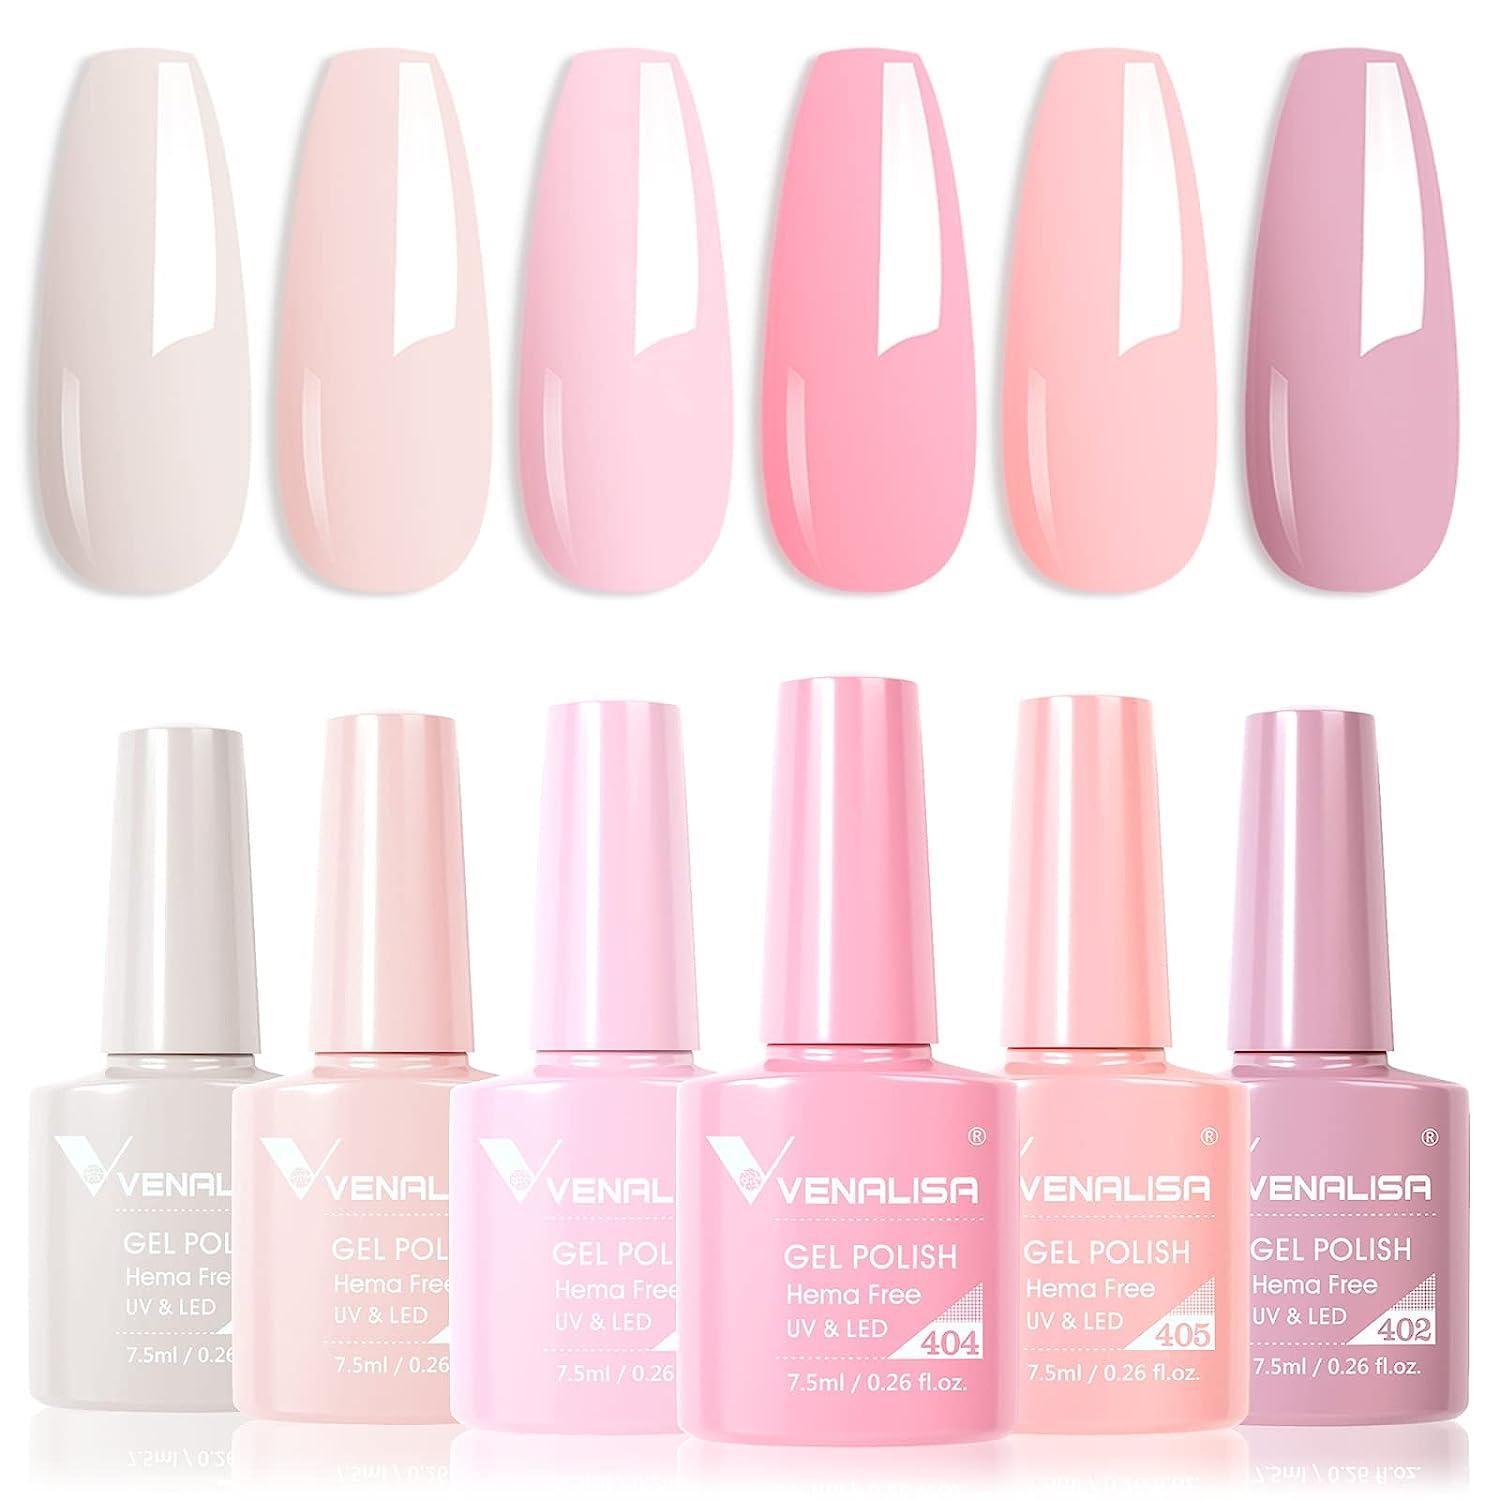 VENALISA Hema-Free Pink Gel Nail Polish Set- 6 Colors Popular